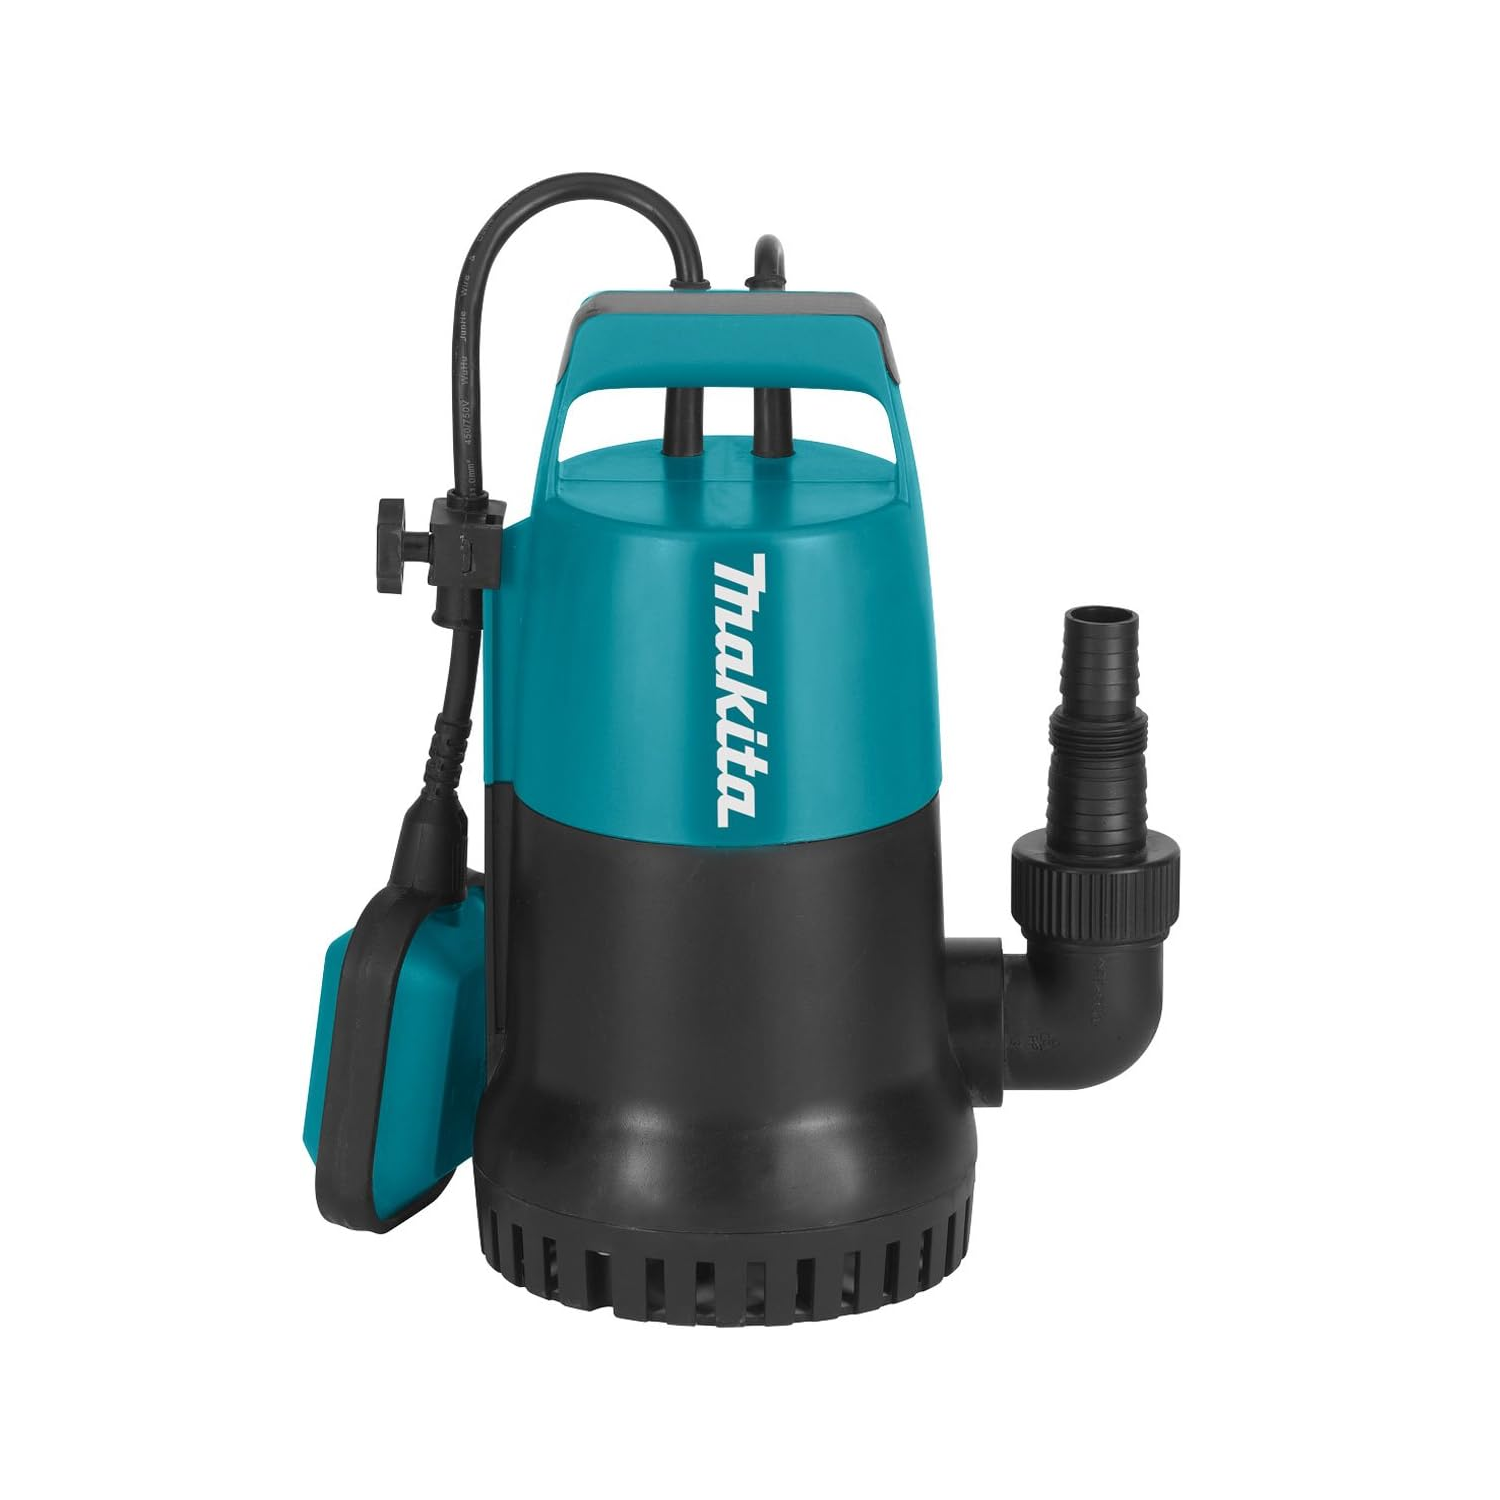 Makita pf0300/2 240v 300w submersible pump 140 litre